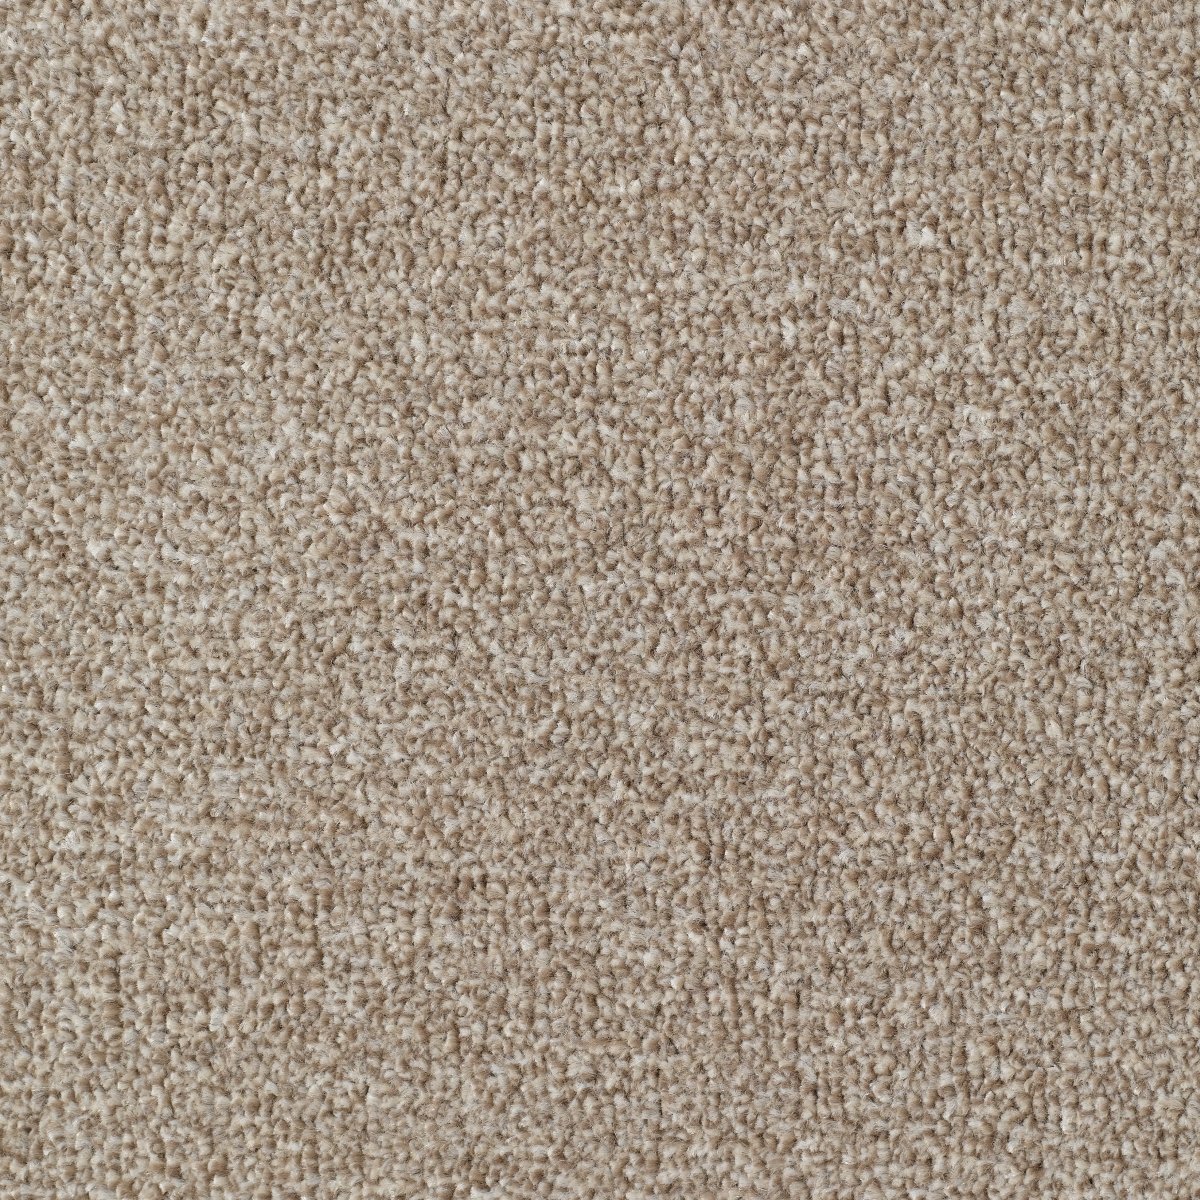 Seaton Valley Soft Deep Pile Saxony Carpet - Latte